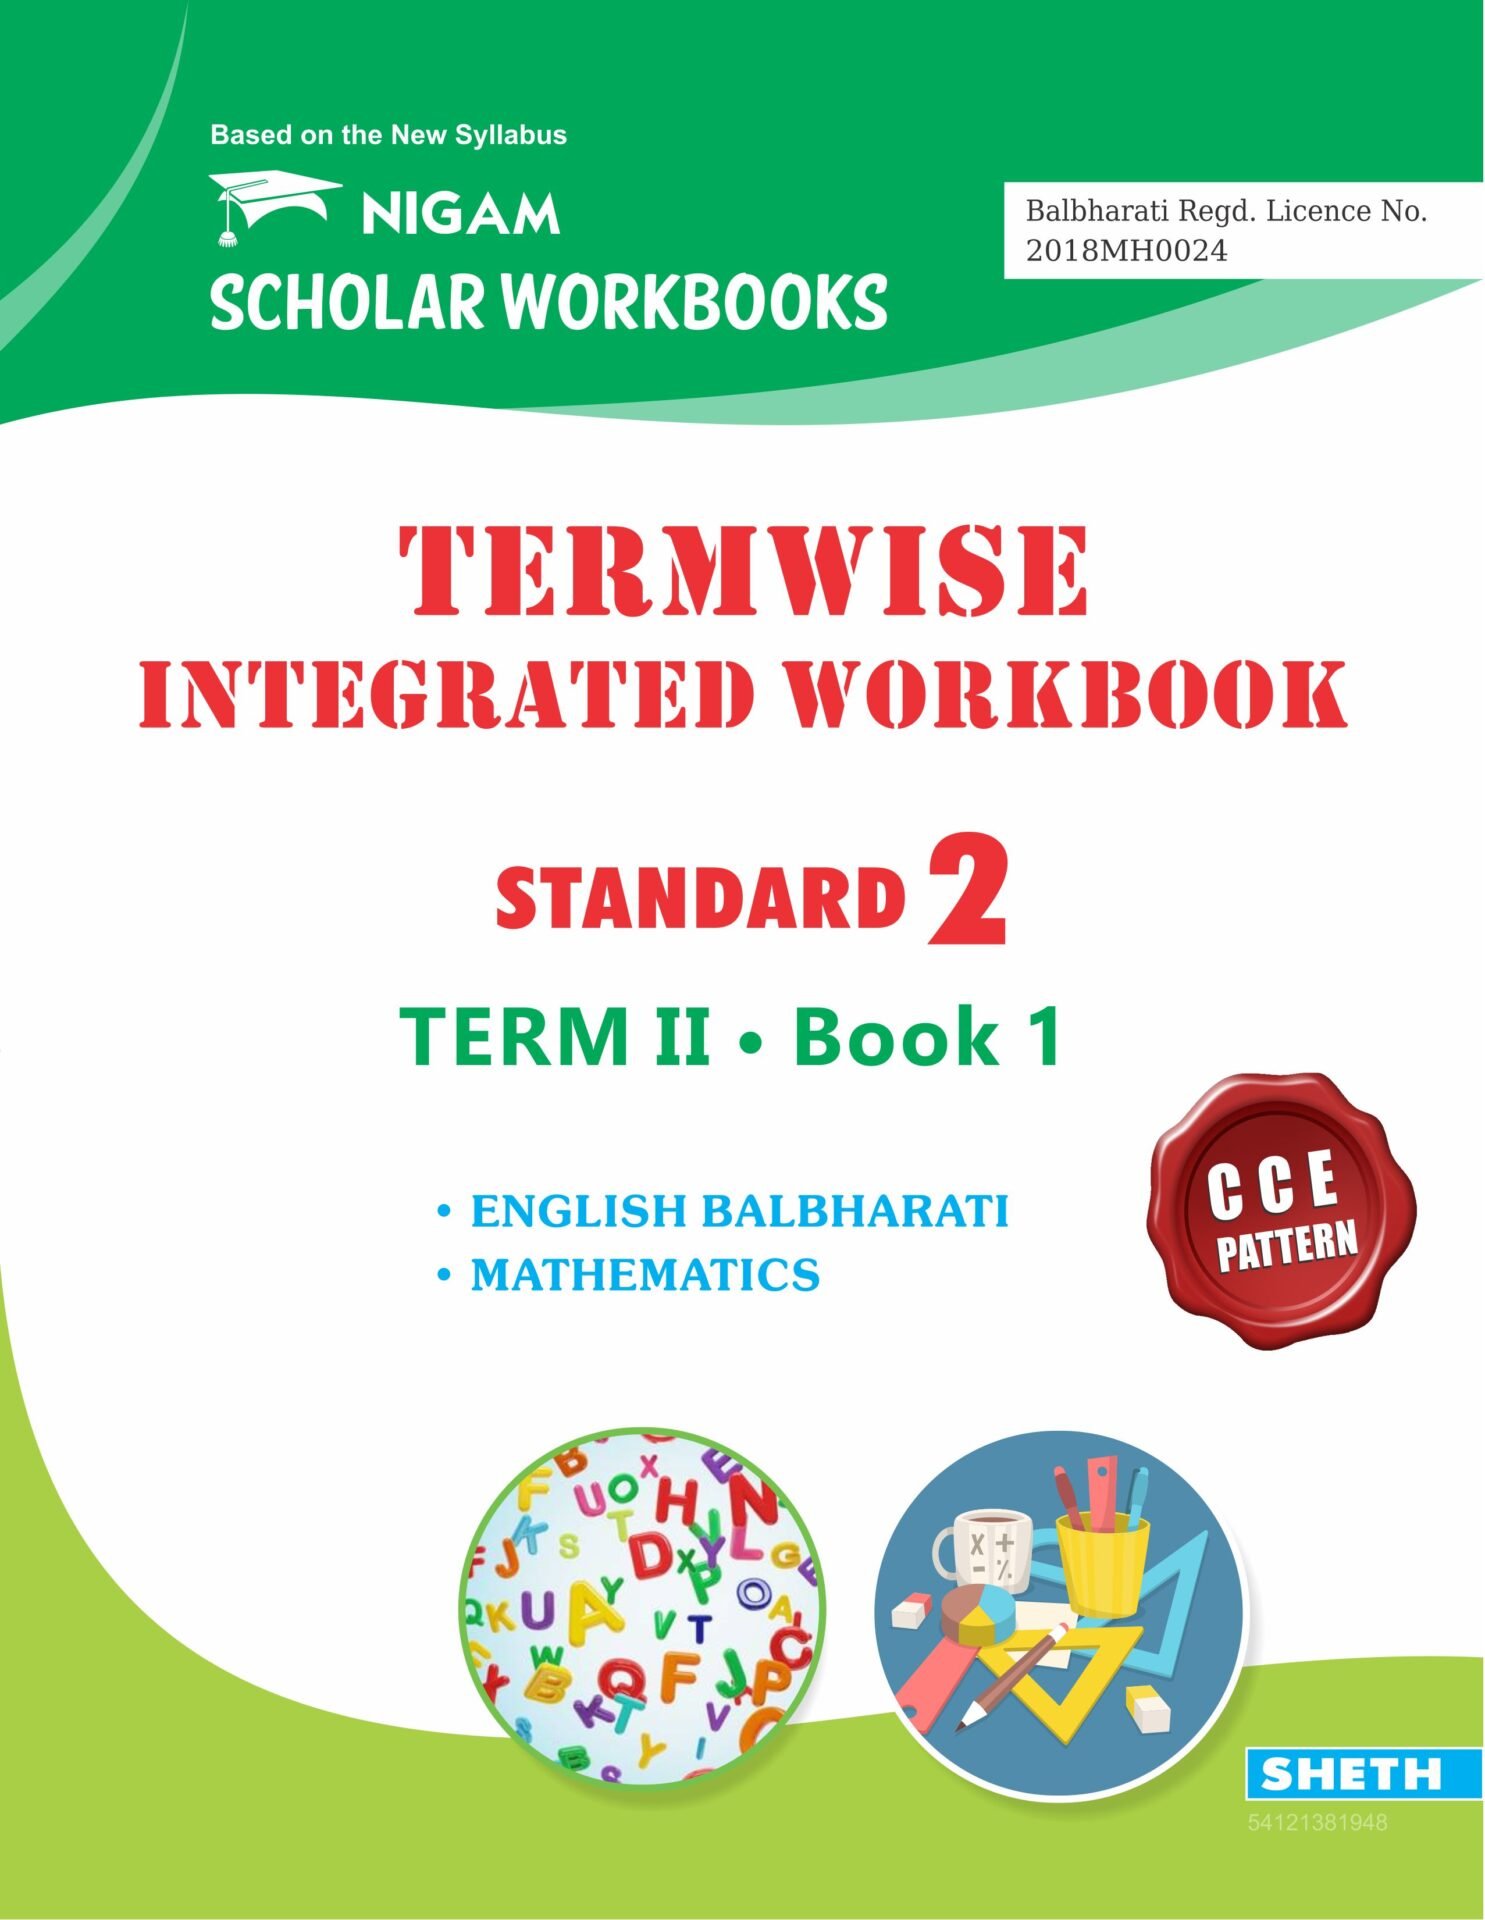 CCE Pattern Nigam Scholar Workbooks Termwise Integrated Workbook English Balbharati and Mathematics Standard 2 Term 2 Book 1 1